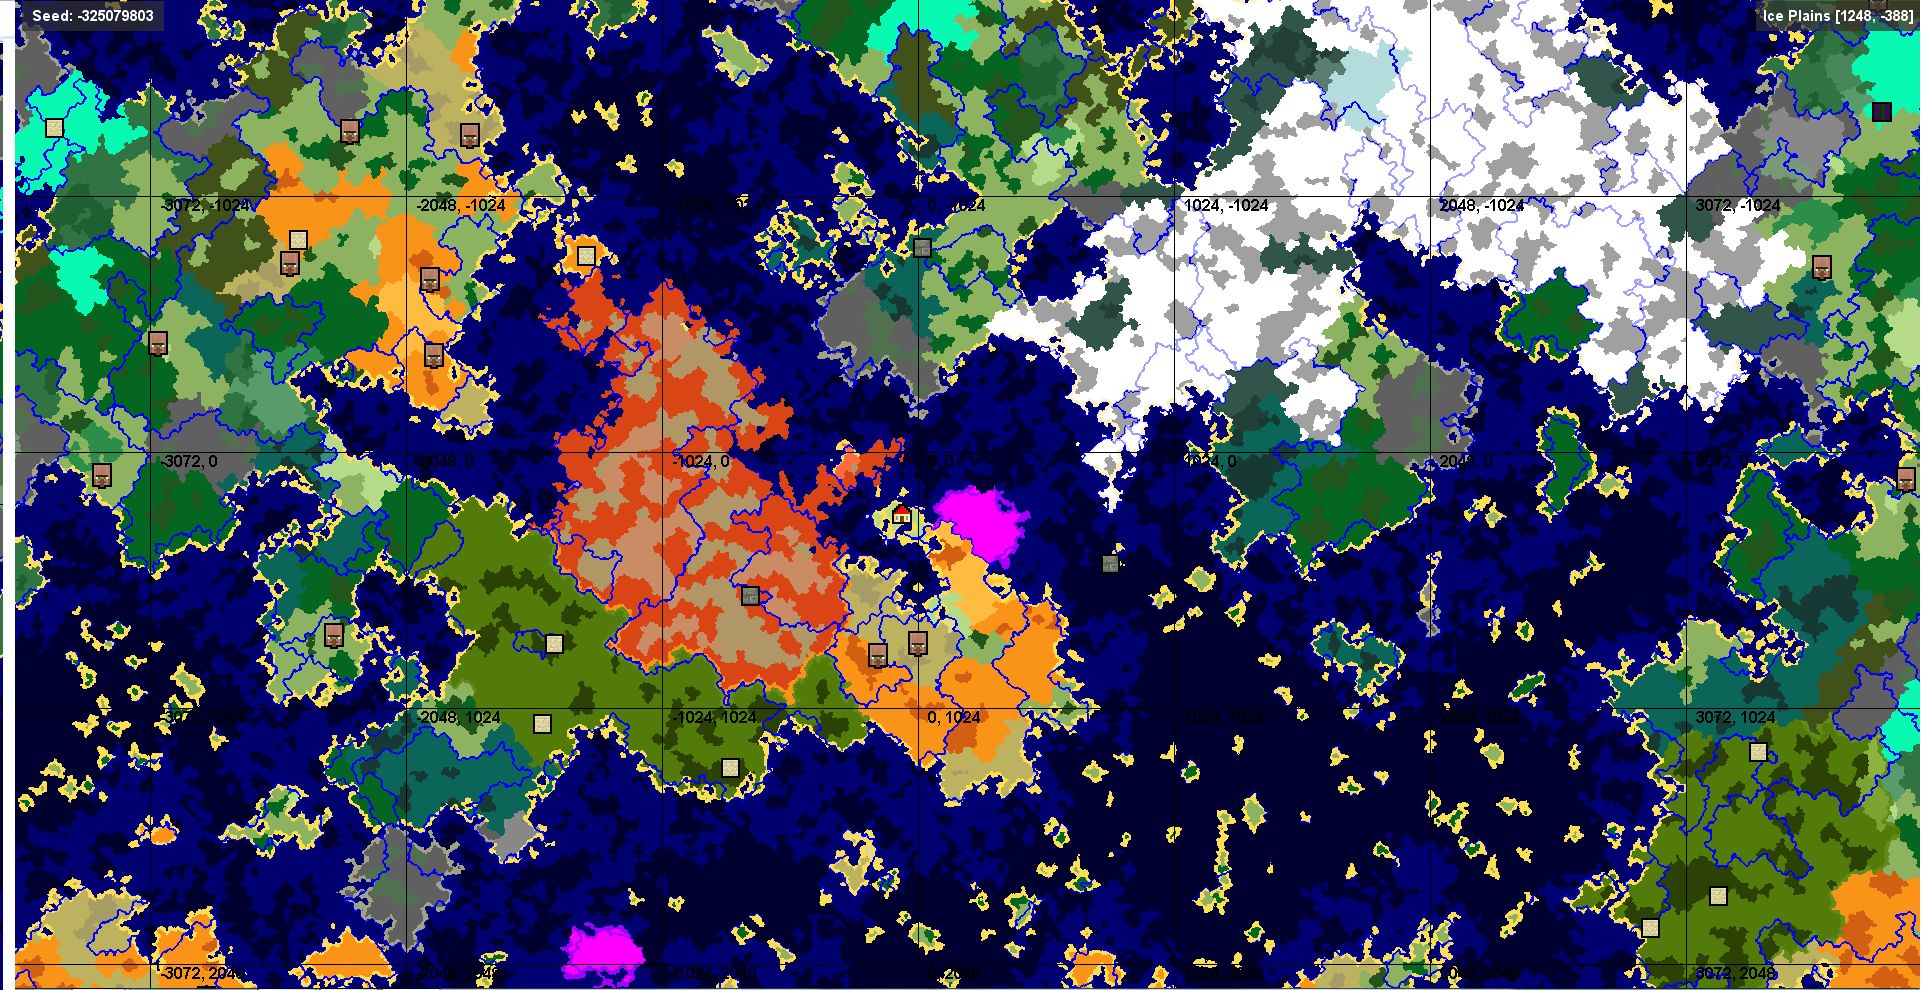 Minecraft Map Based On Seed